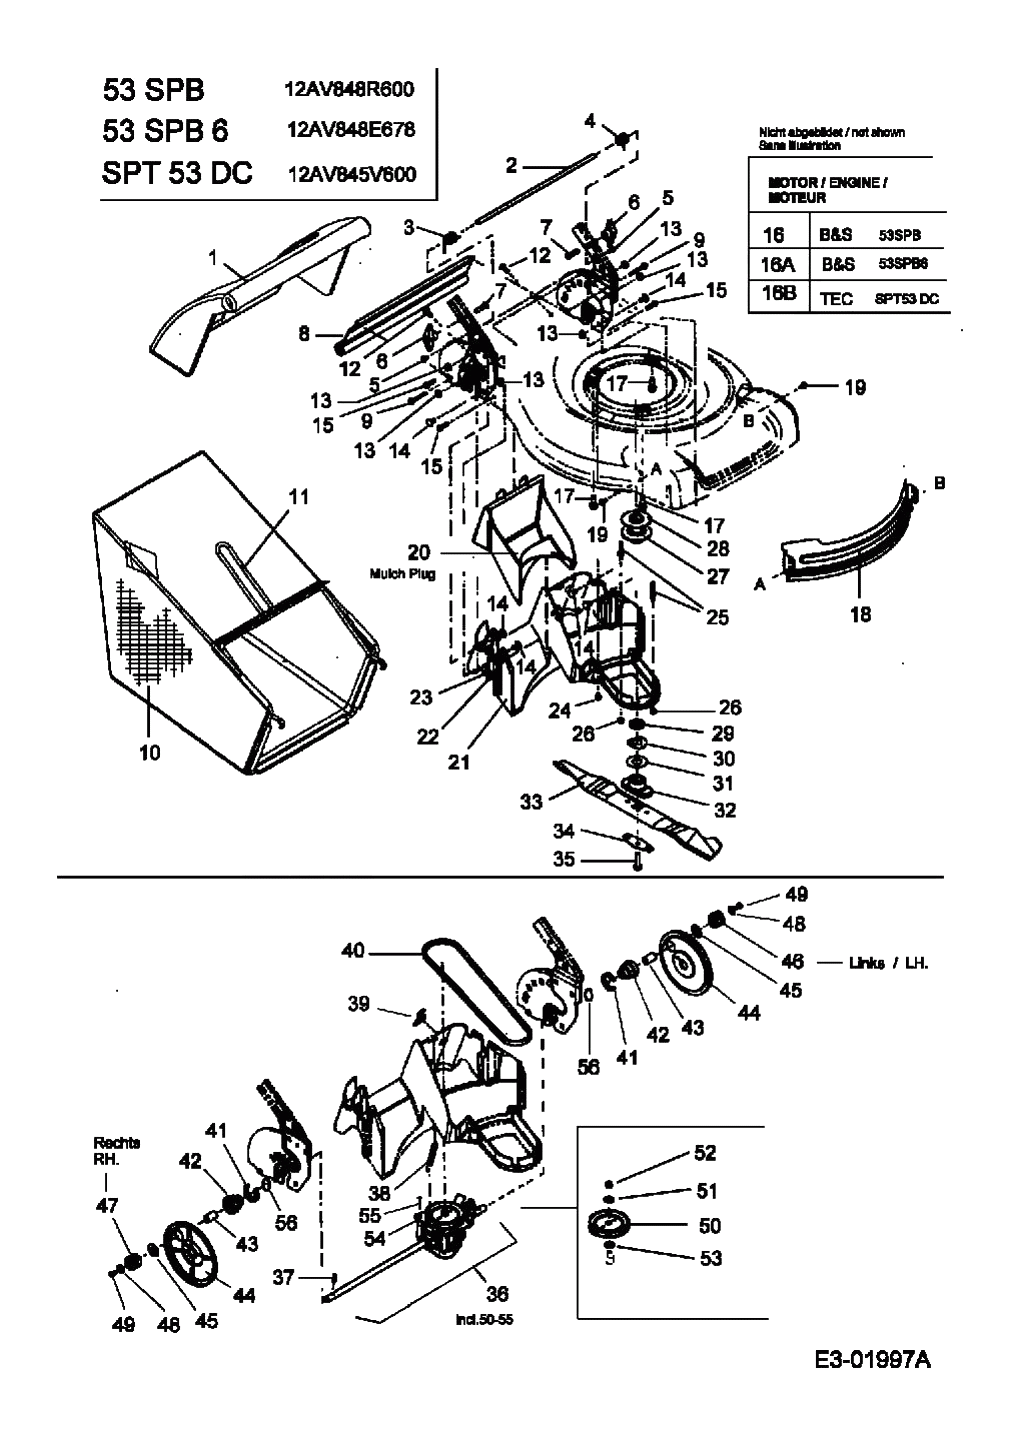 MTD Артикул 12AV848E678 (год выпуска 2005). Коробка передач, травосборник, нож, двигатель